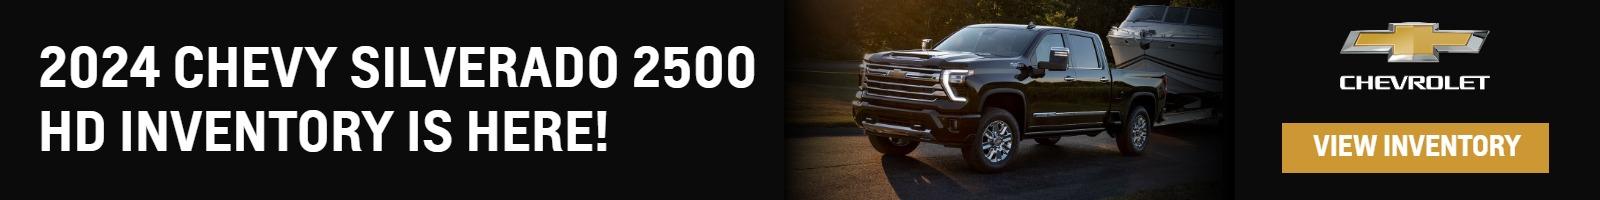 2024 Chevy Silverado 2500 HD Inventory is Here!